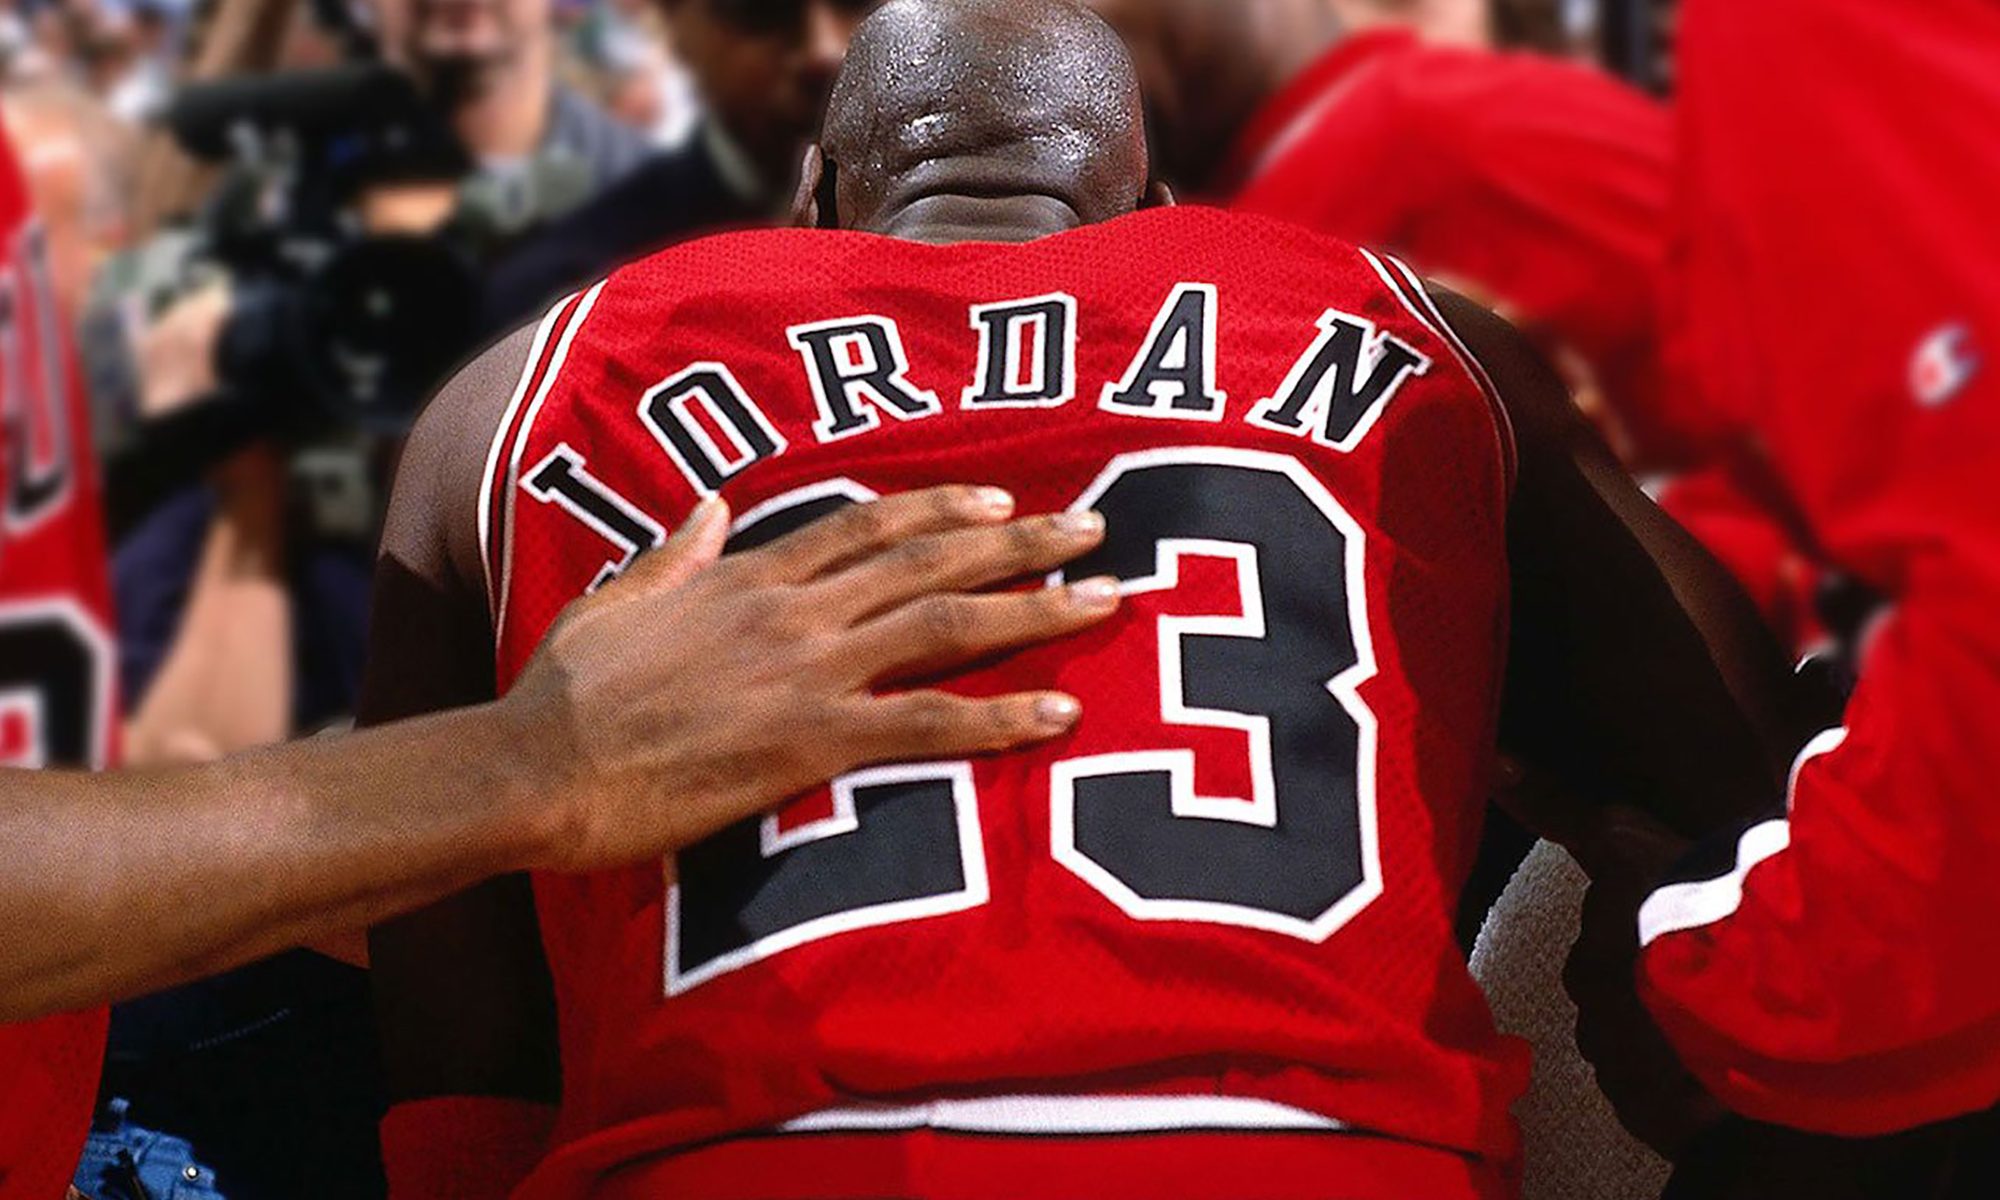 Michael Jordan: The Last dance